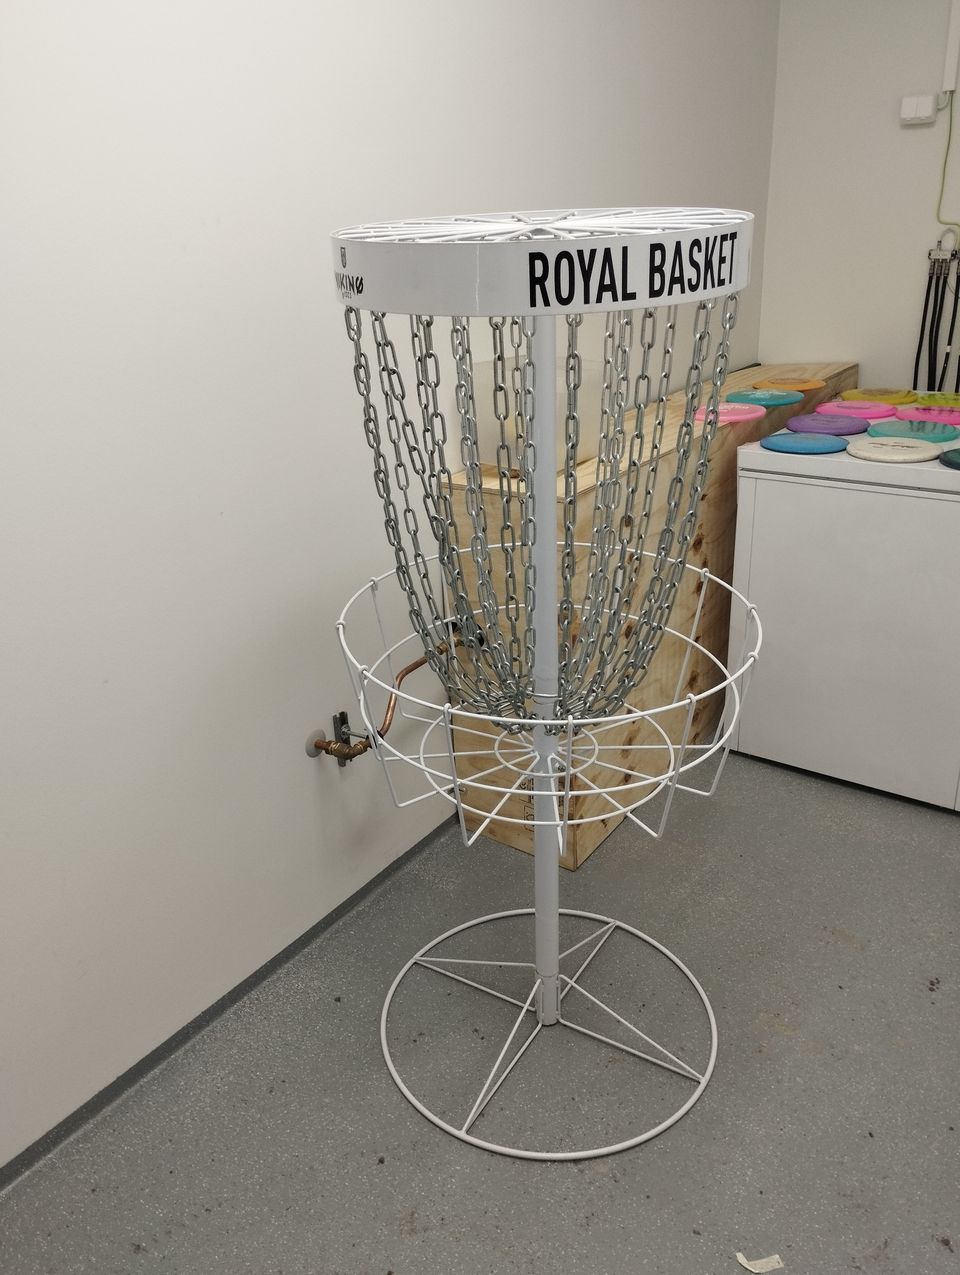 Royal basket